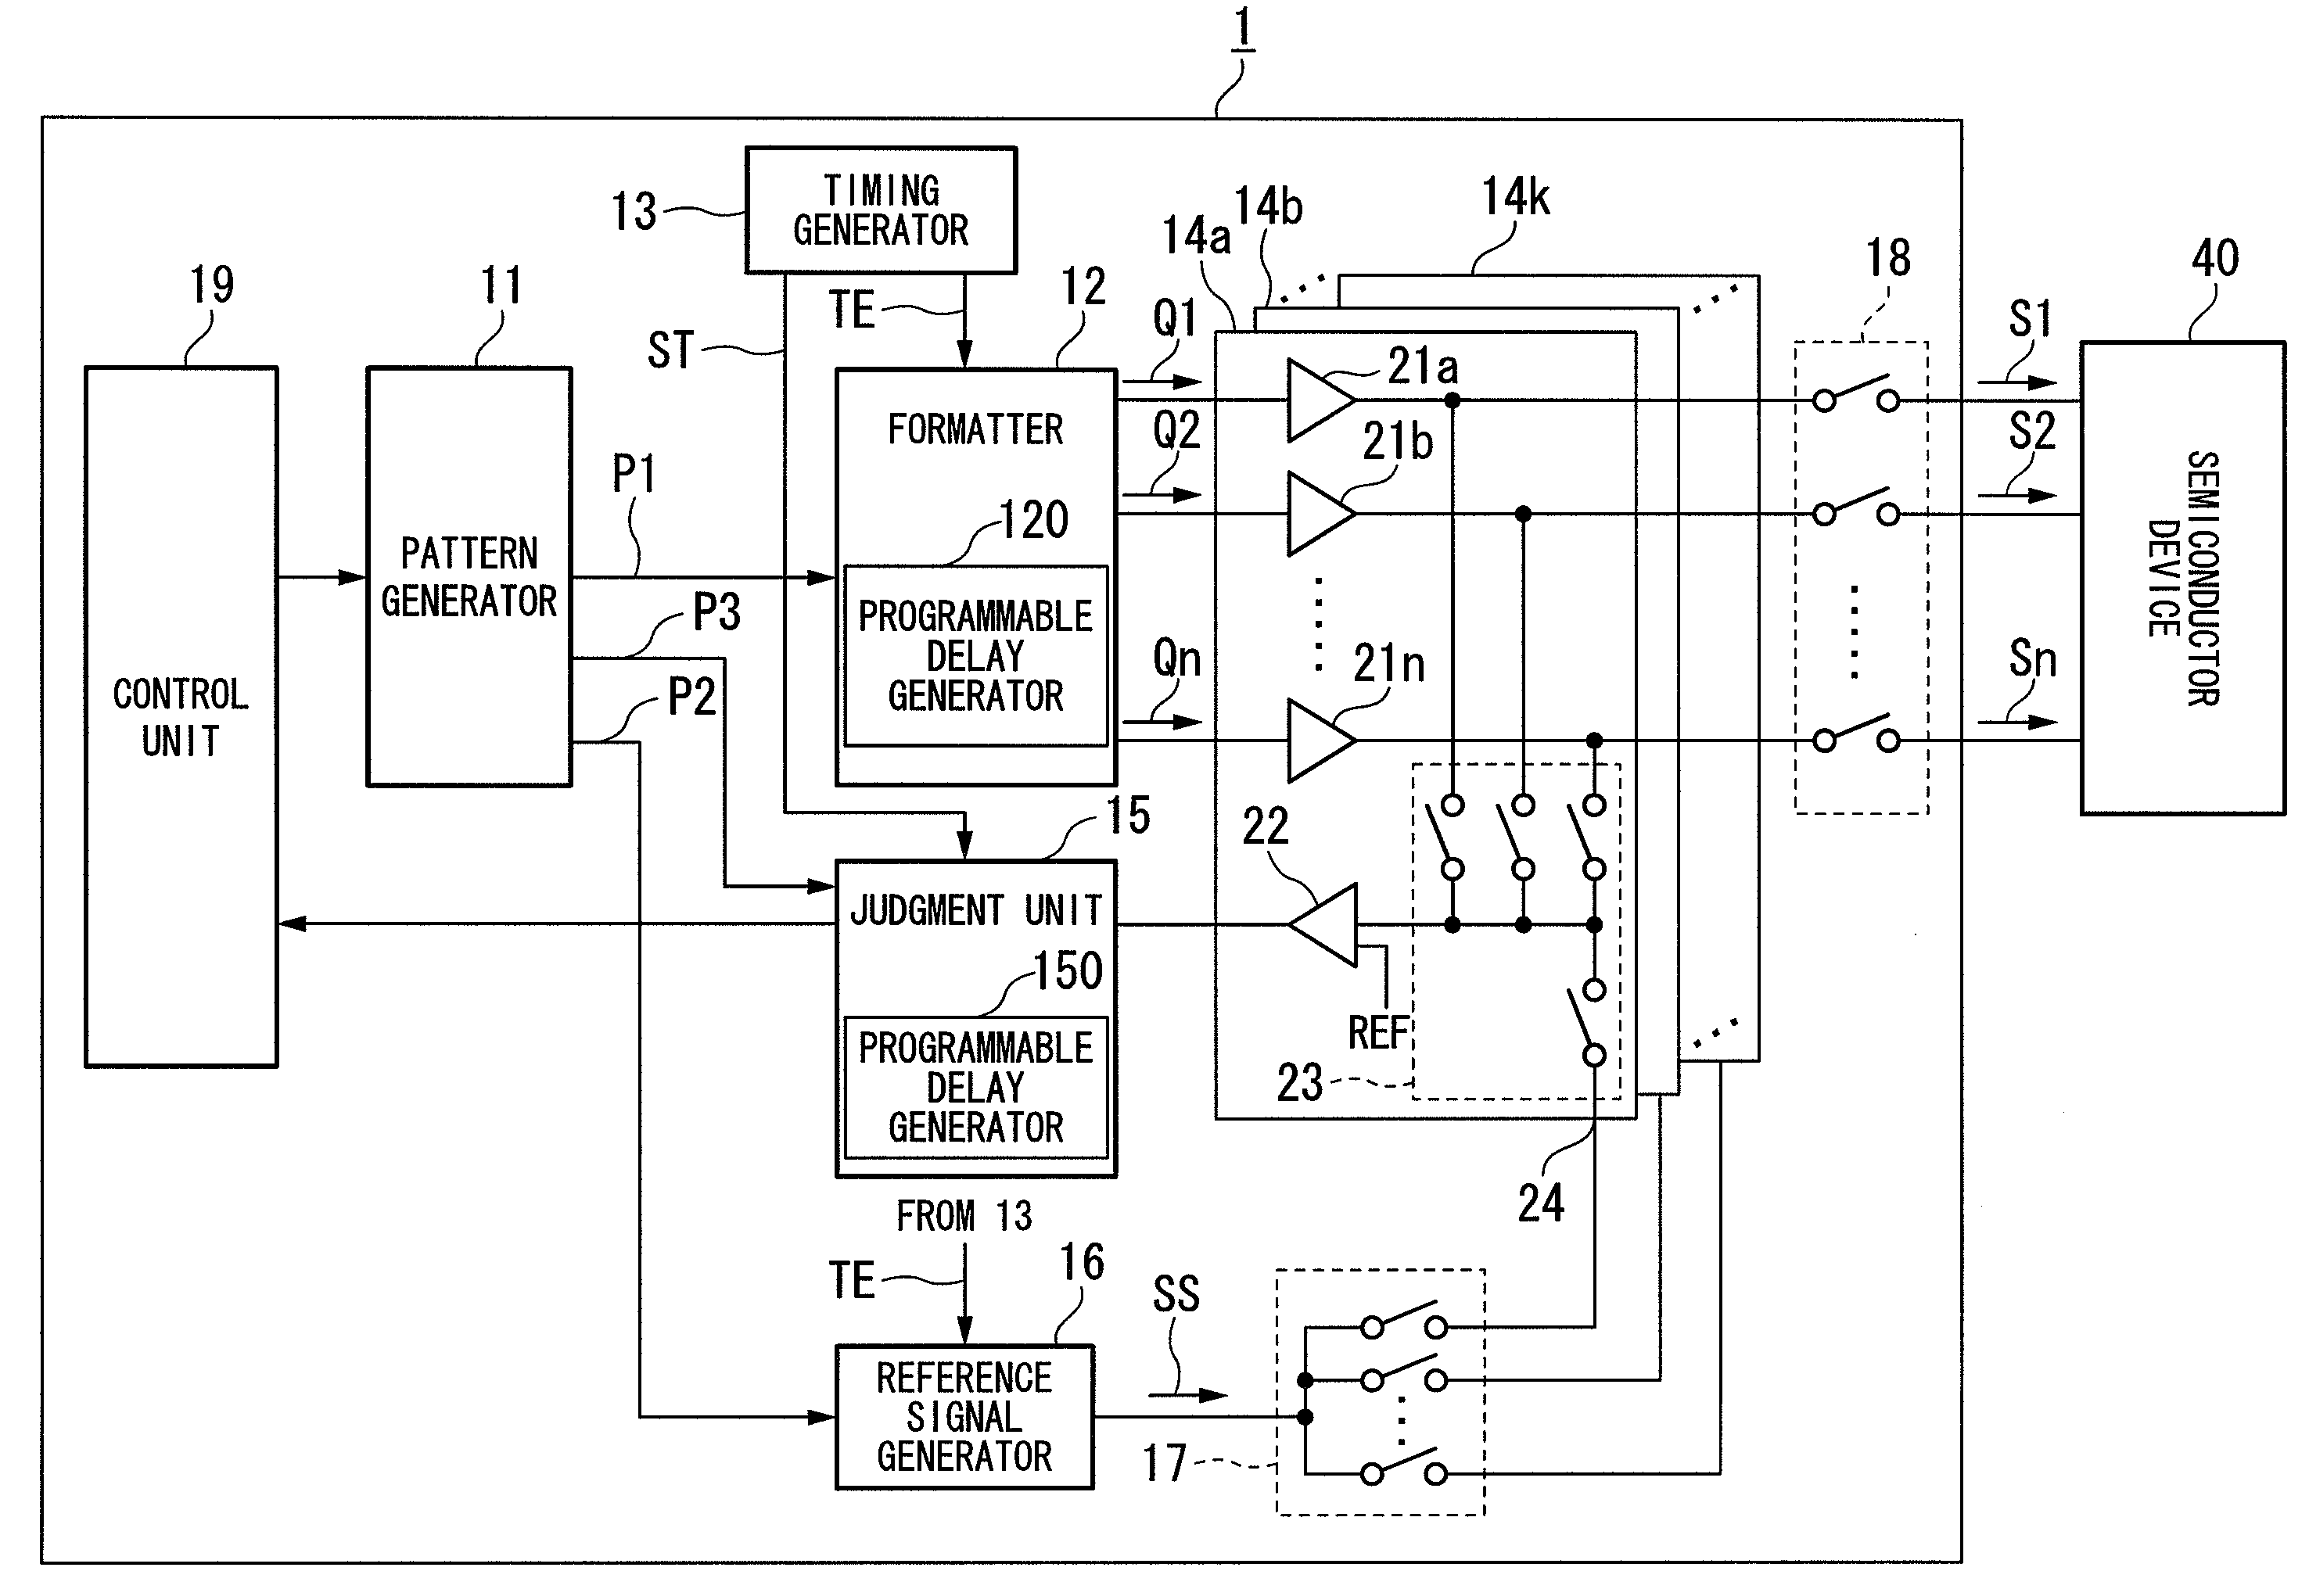 Semiconductor test apparatus